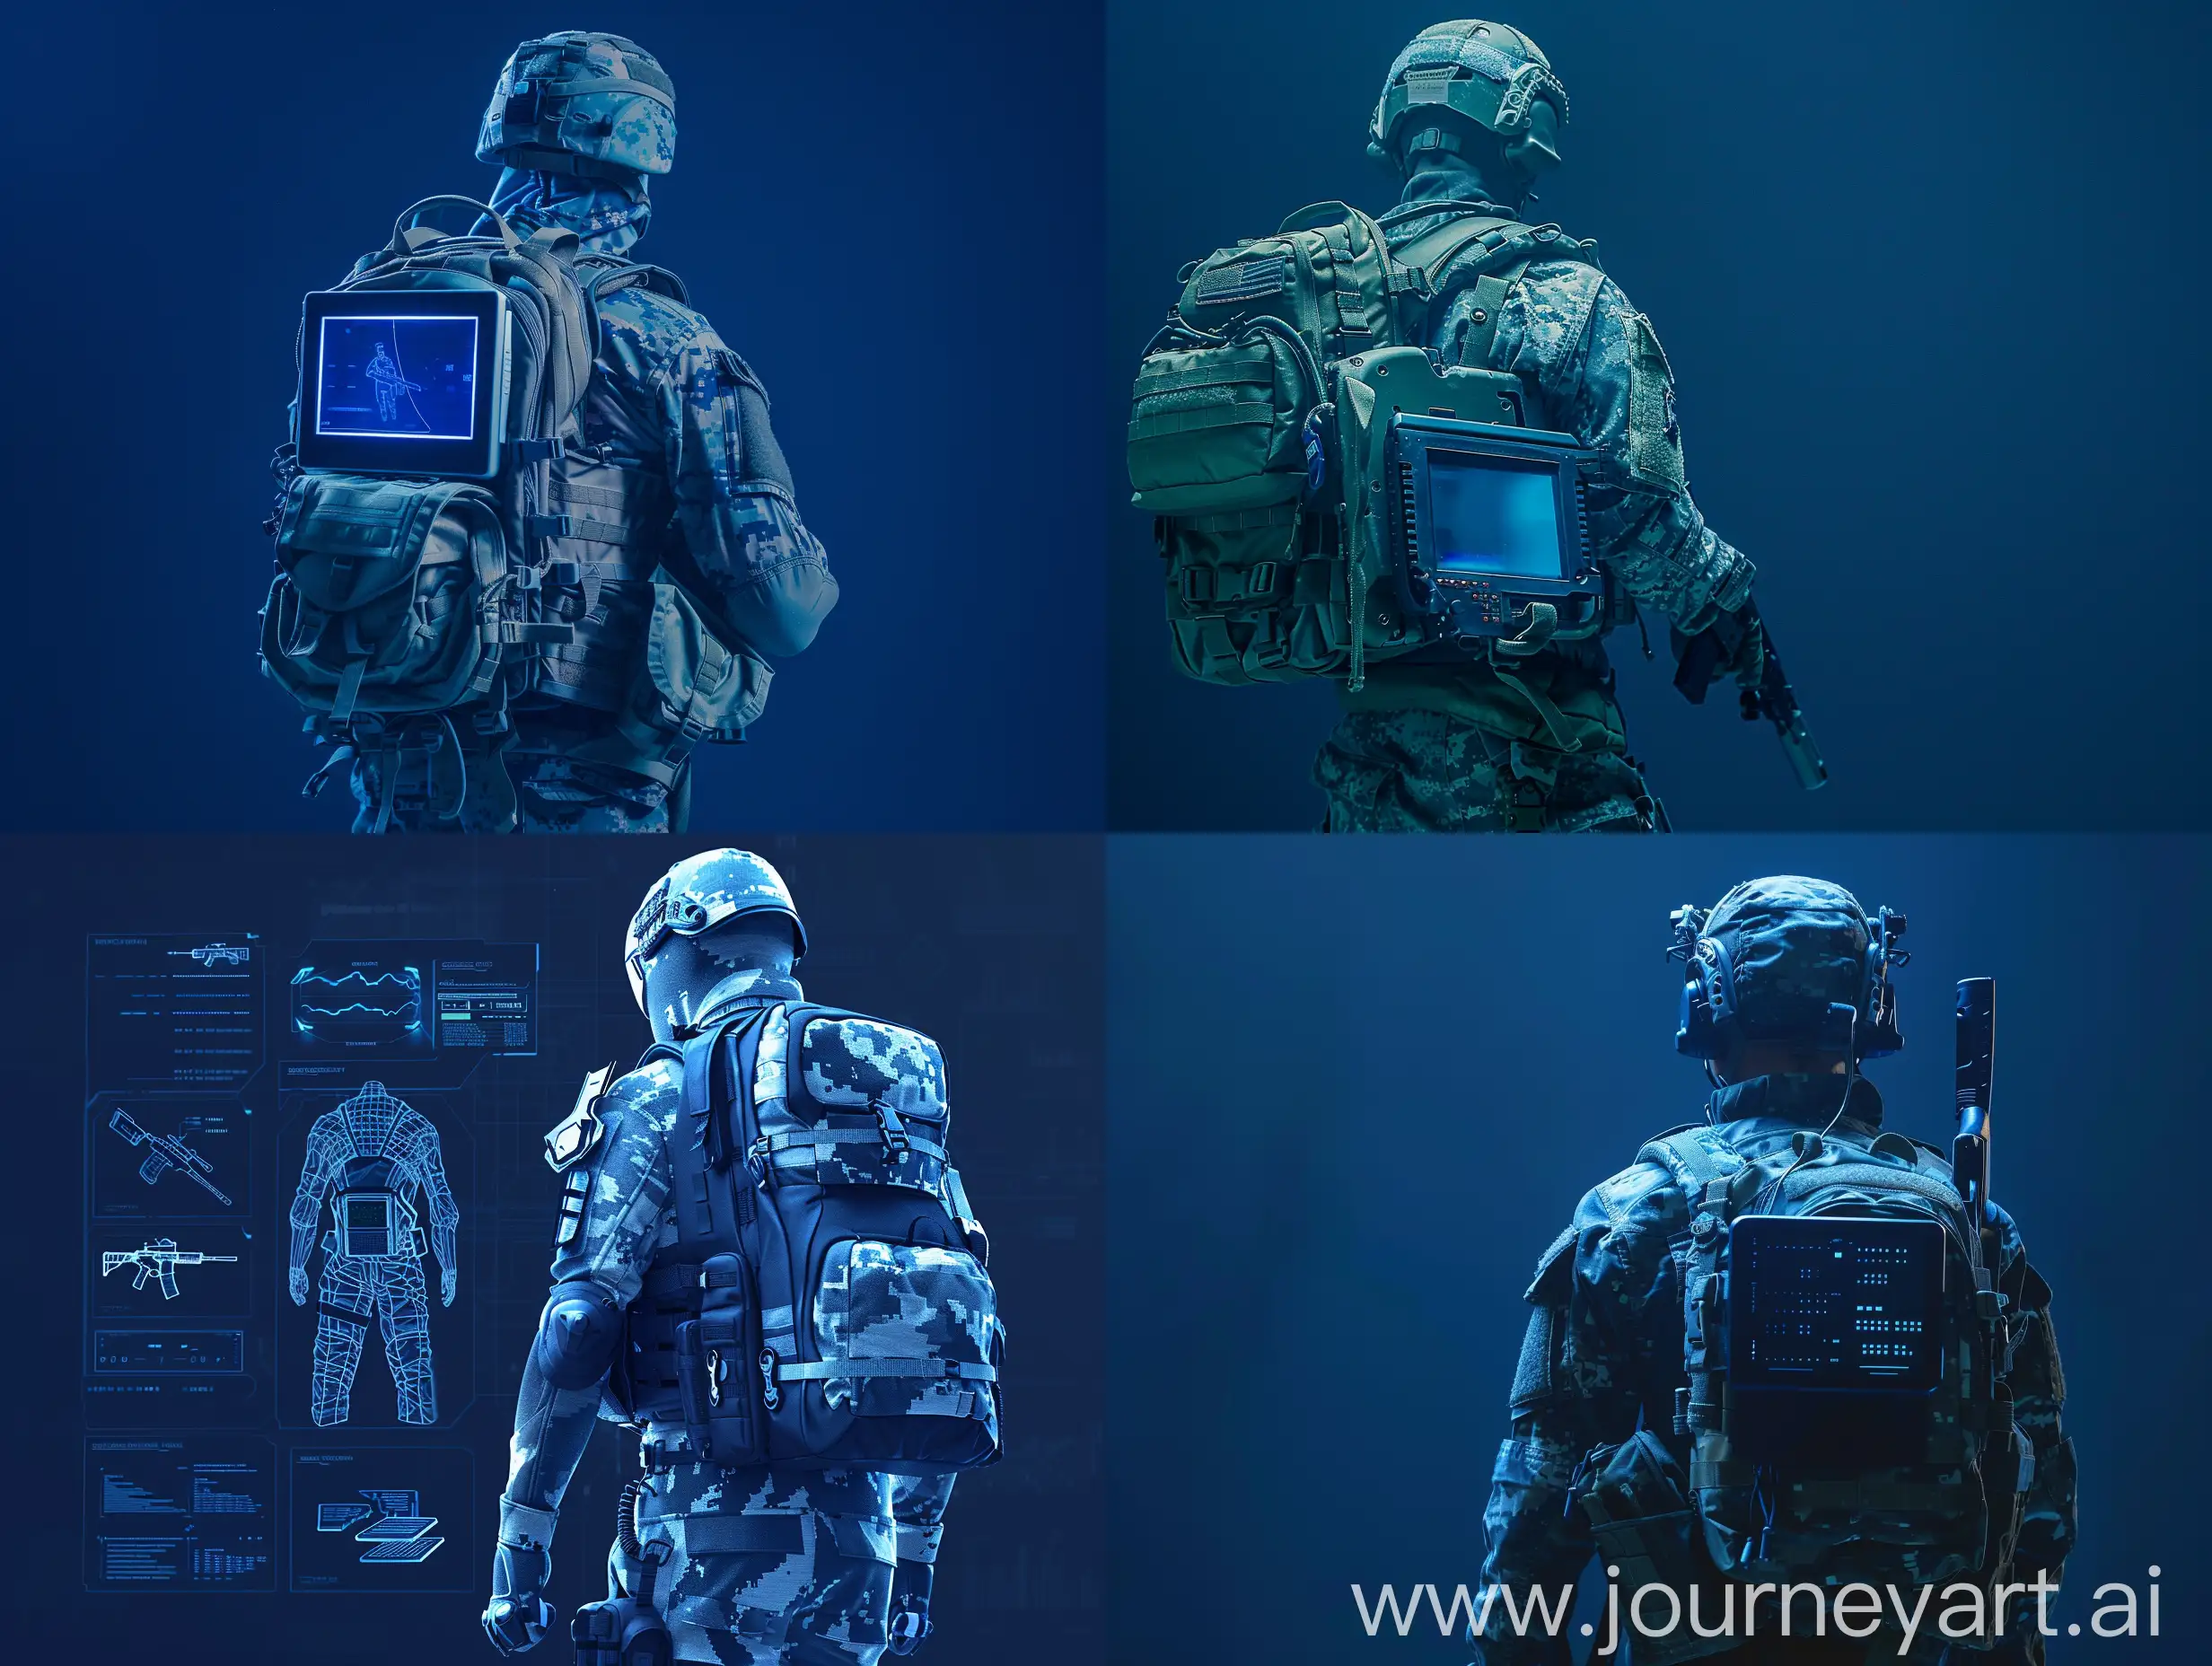 Futuristic-Soldier-Simulation-Training-in-Dark-Blue-Environment